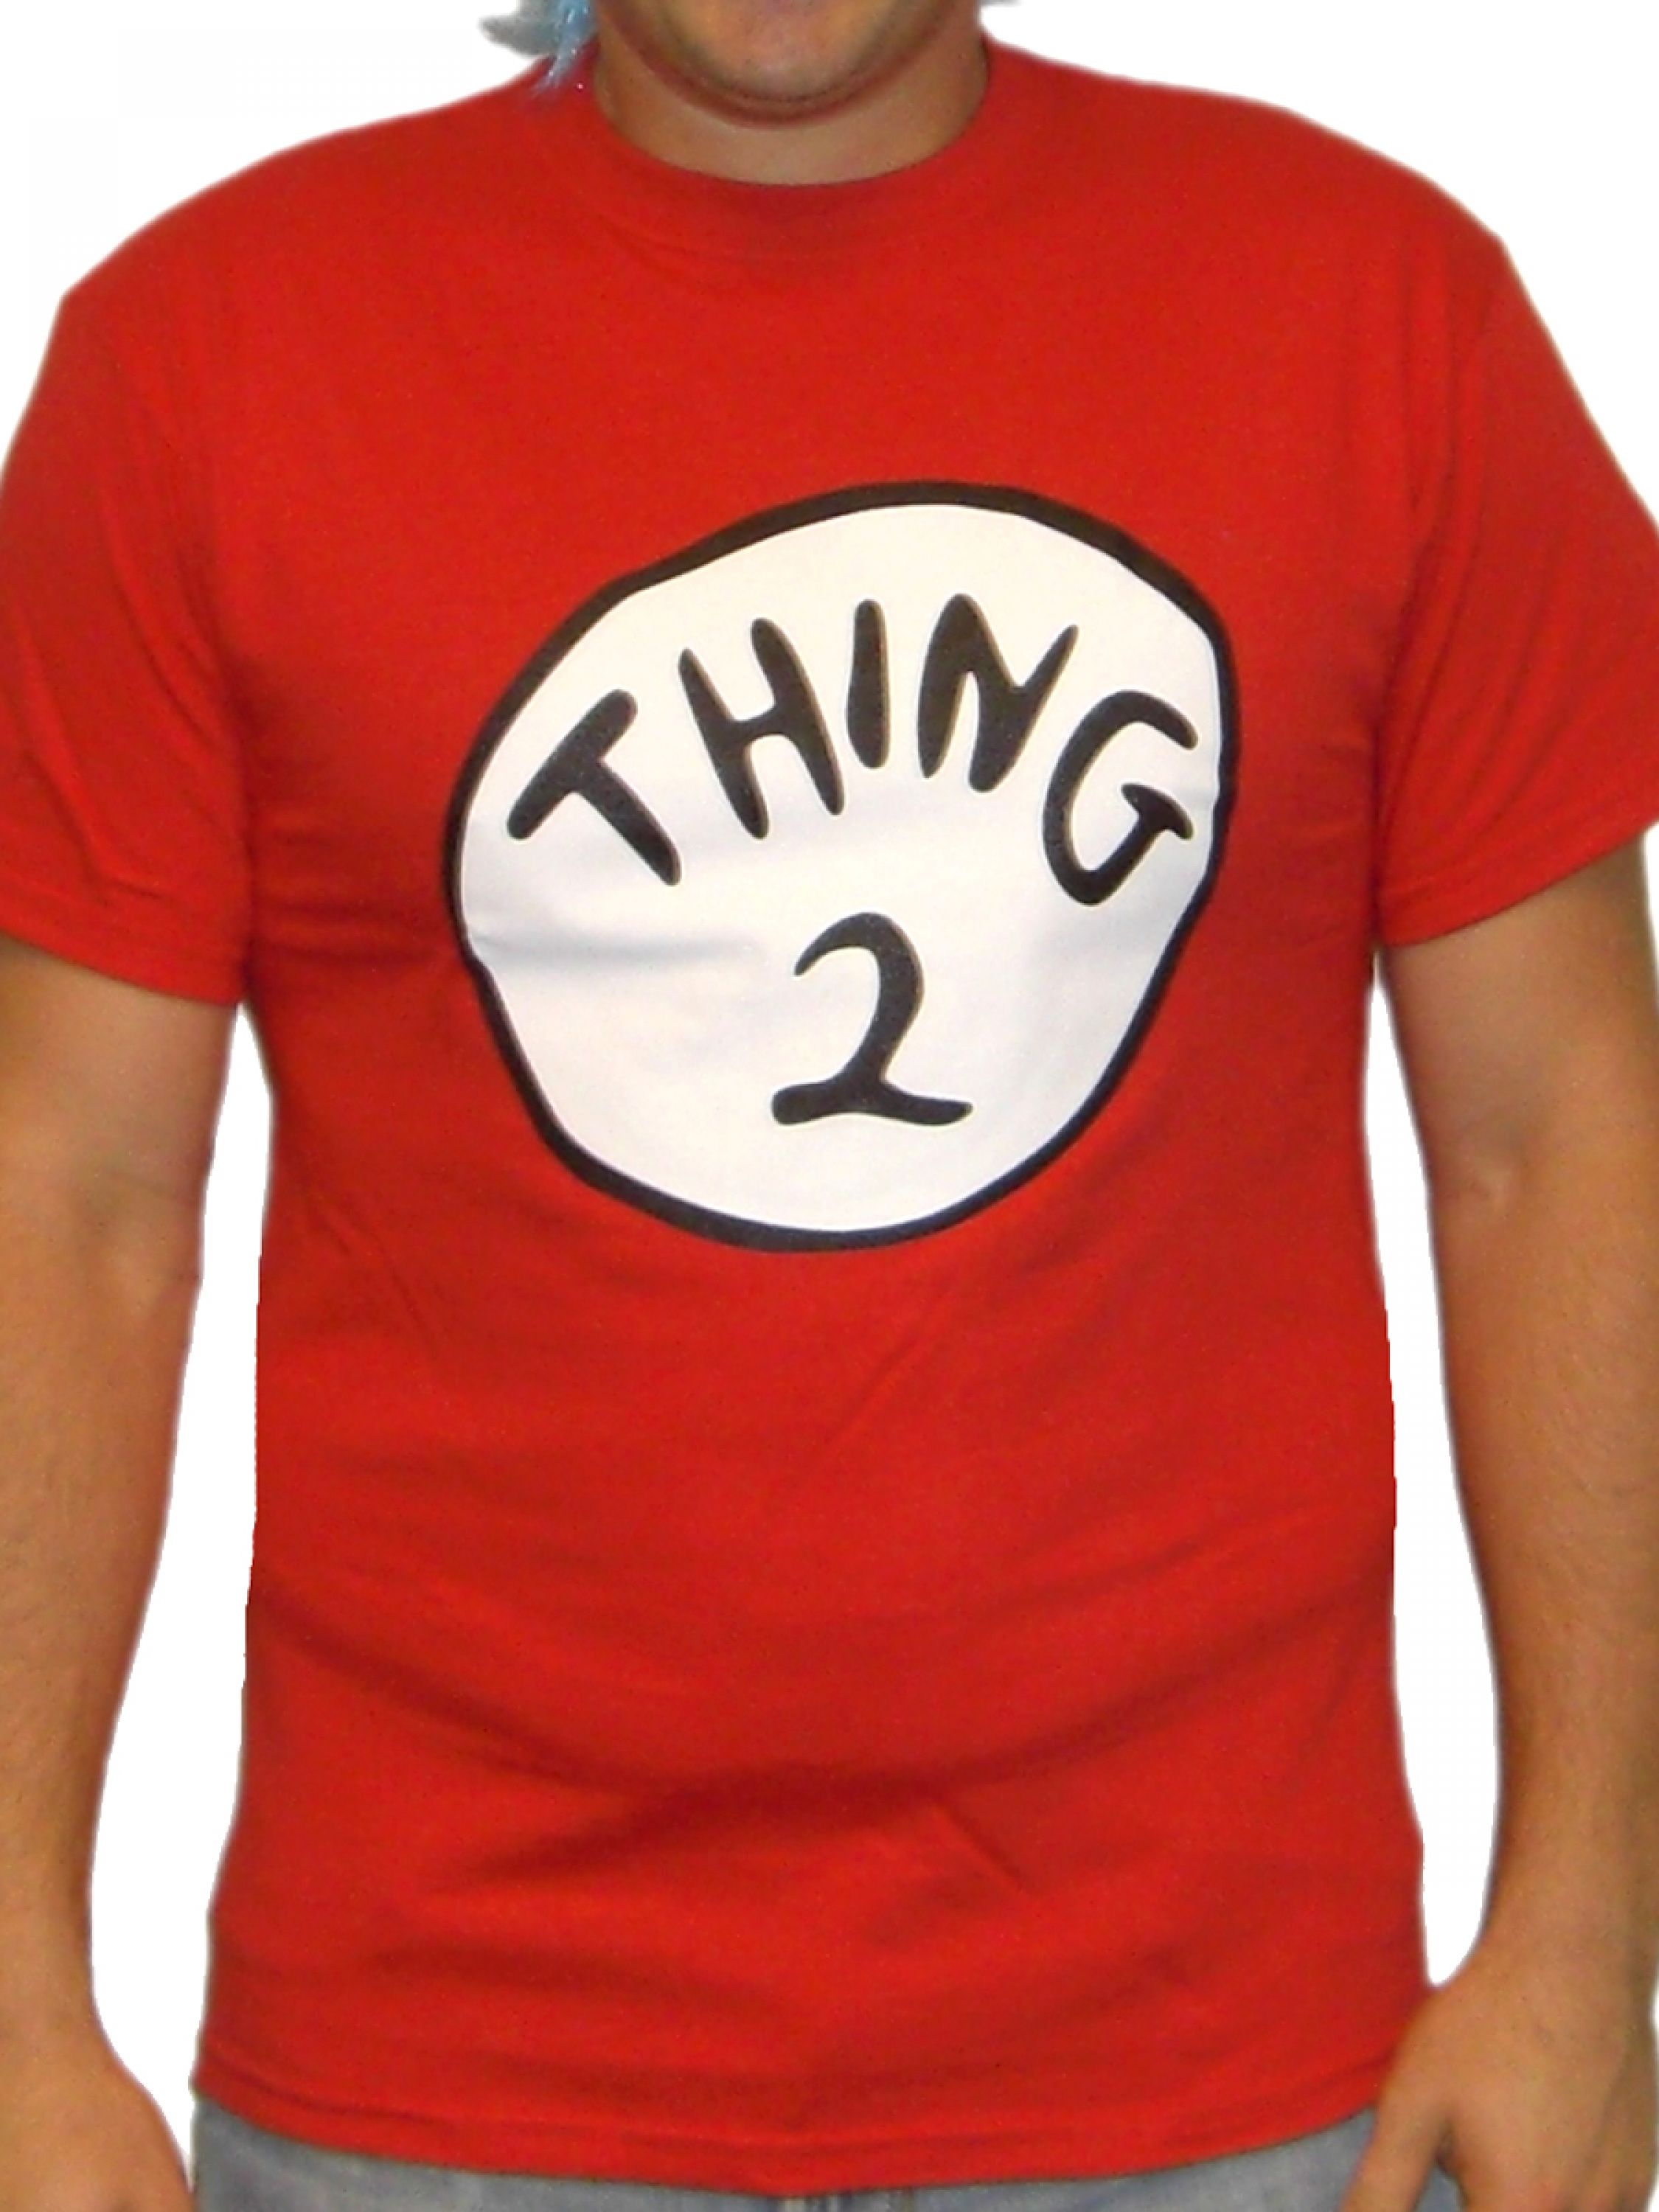 TENKING Women/'s Thing 1 and Thing 2 T-Shirt